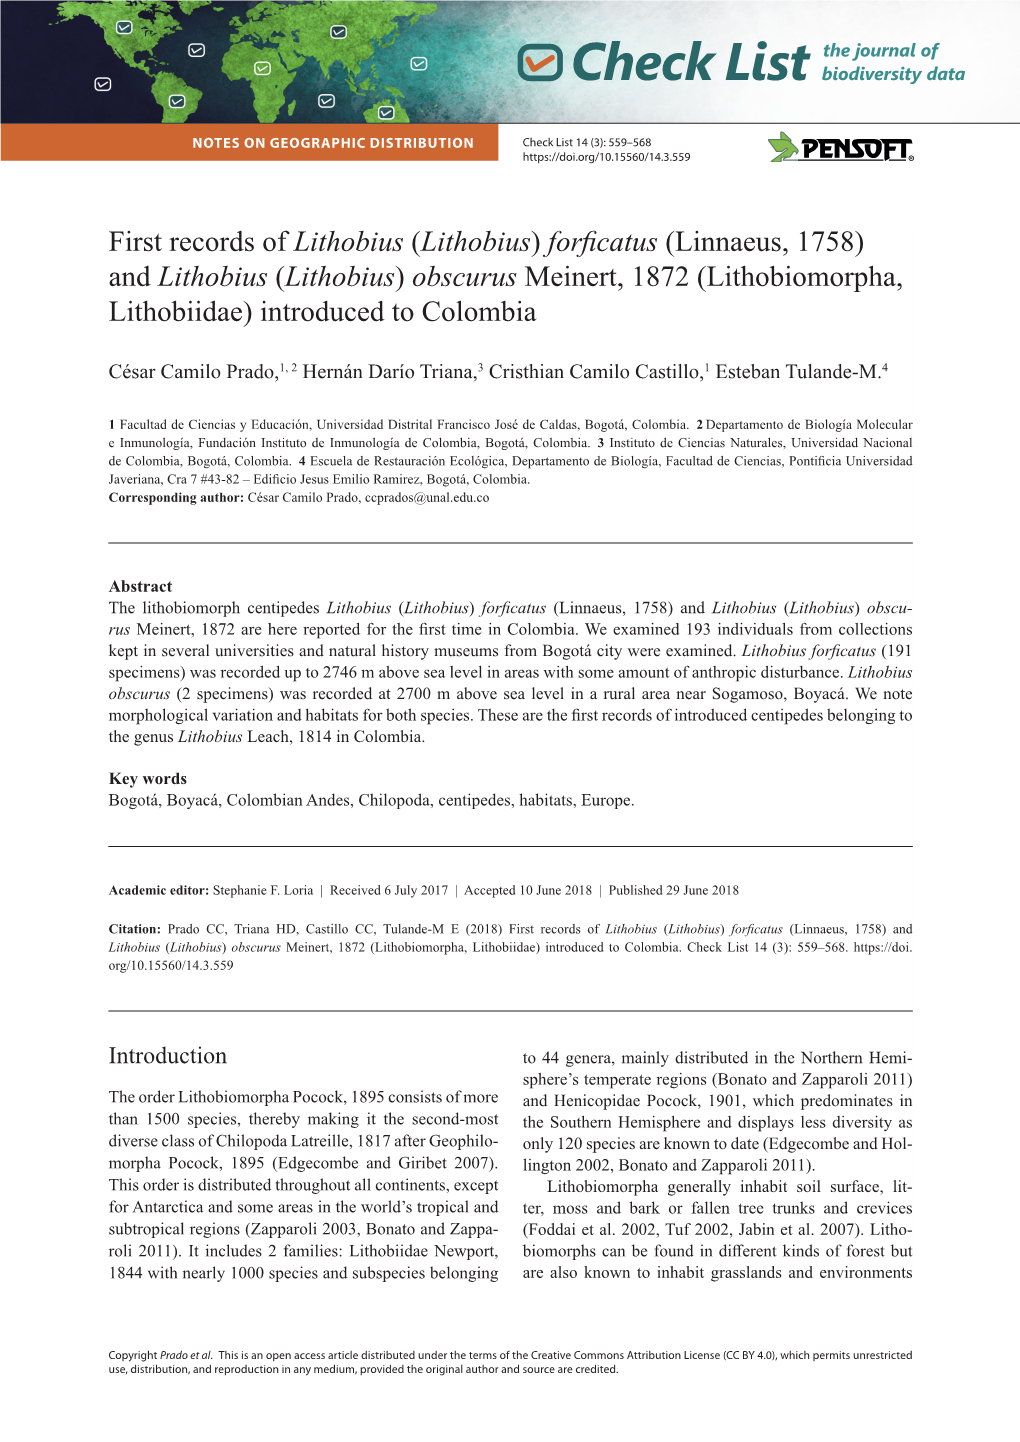 (Lithobius) Forficatus (Linnaeus, 1758) and Lithobius (Lithobius) Obscurus Meinert, 1872 (Lithobiomorpha, Lithobiidae) Introduced to Colombia